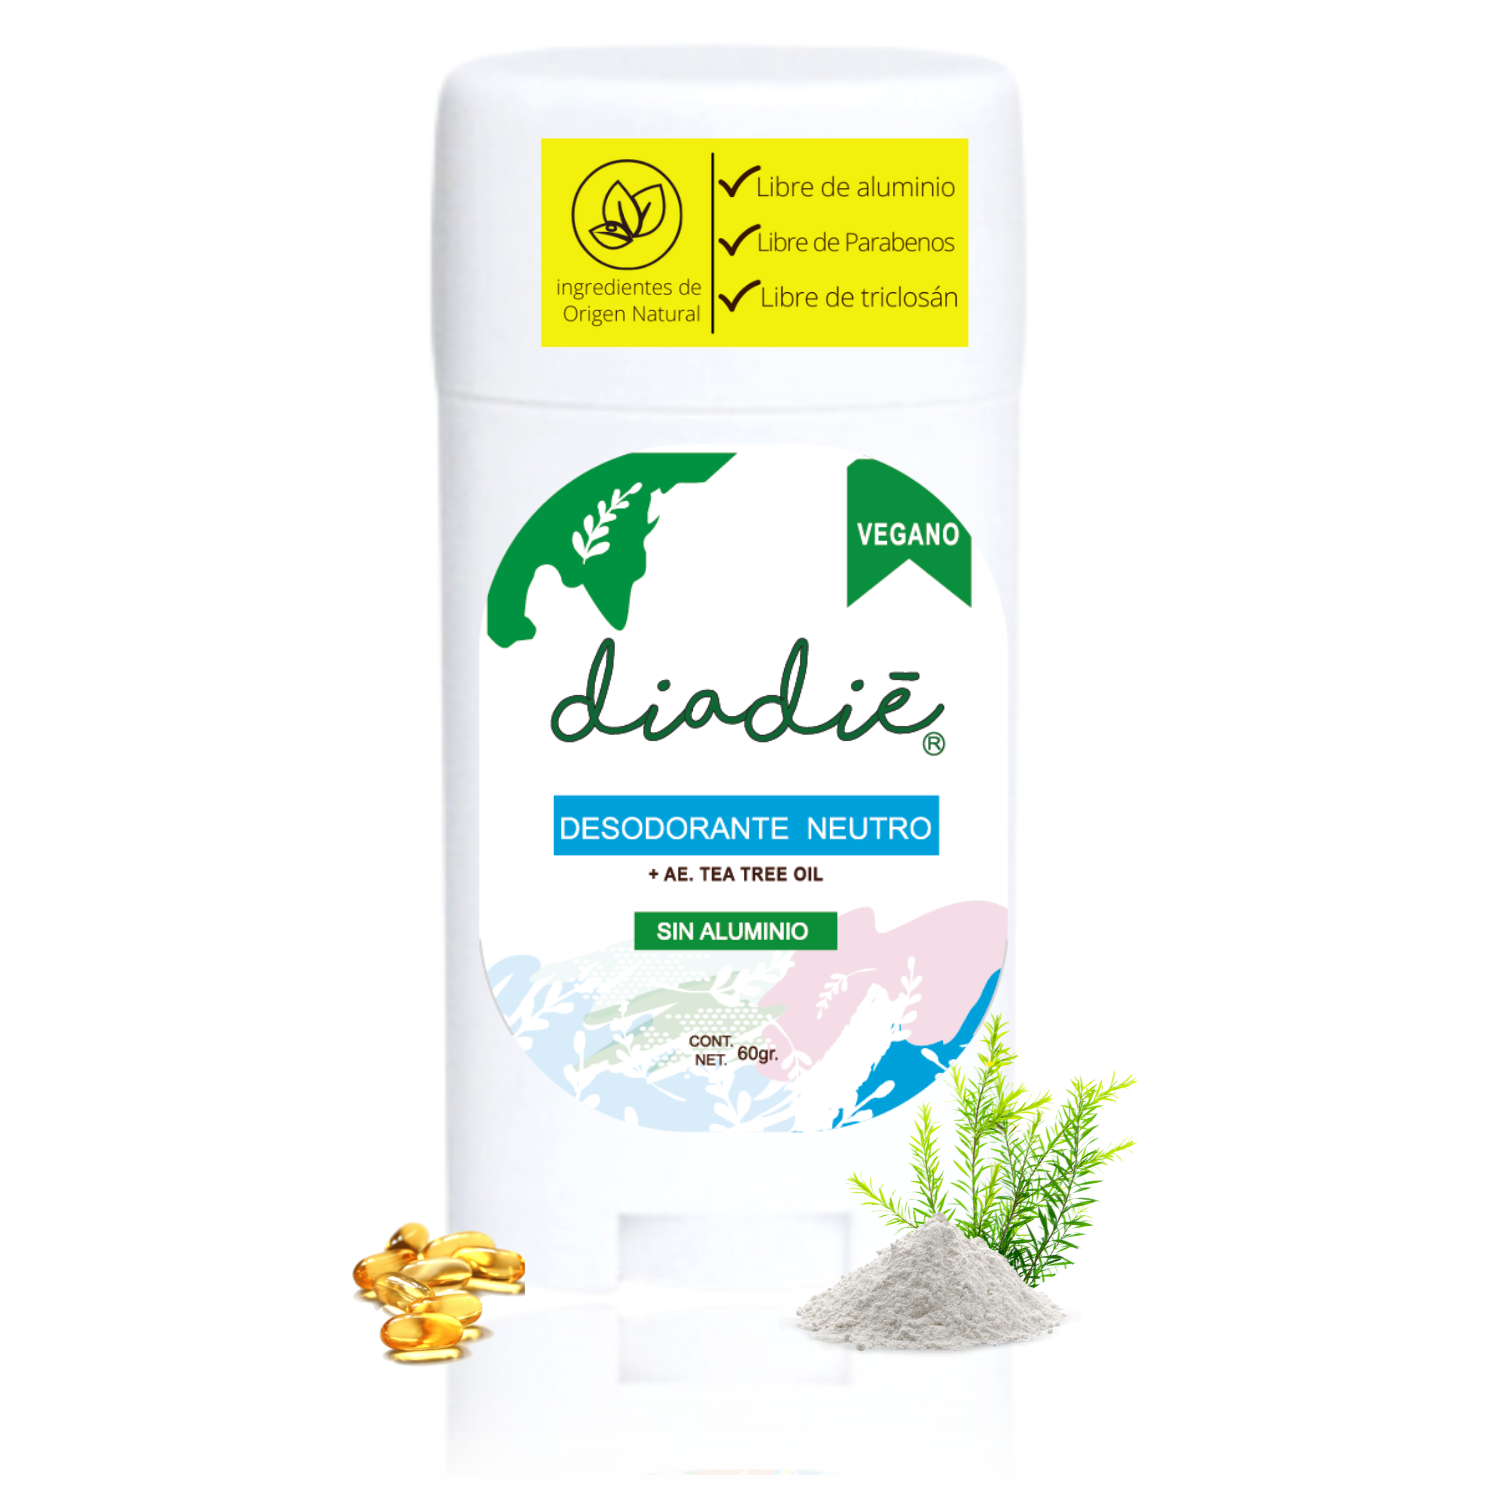 Diadie Desodorante natural neutro, Infantil para Niños y Niñas, Vegano, Sin Aluminio, Barra, 60g, 1 Pack